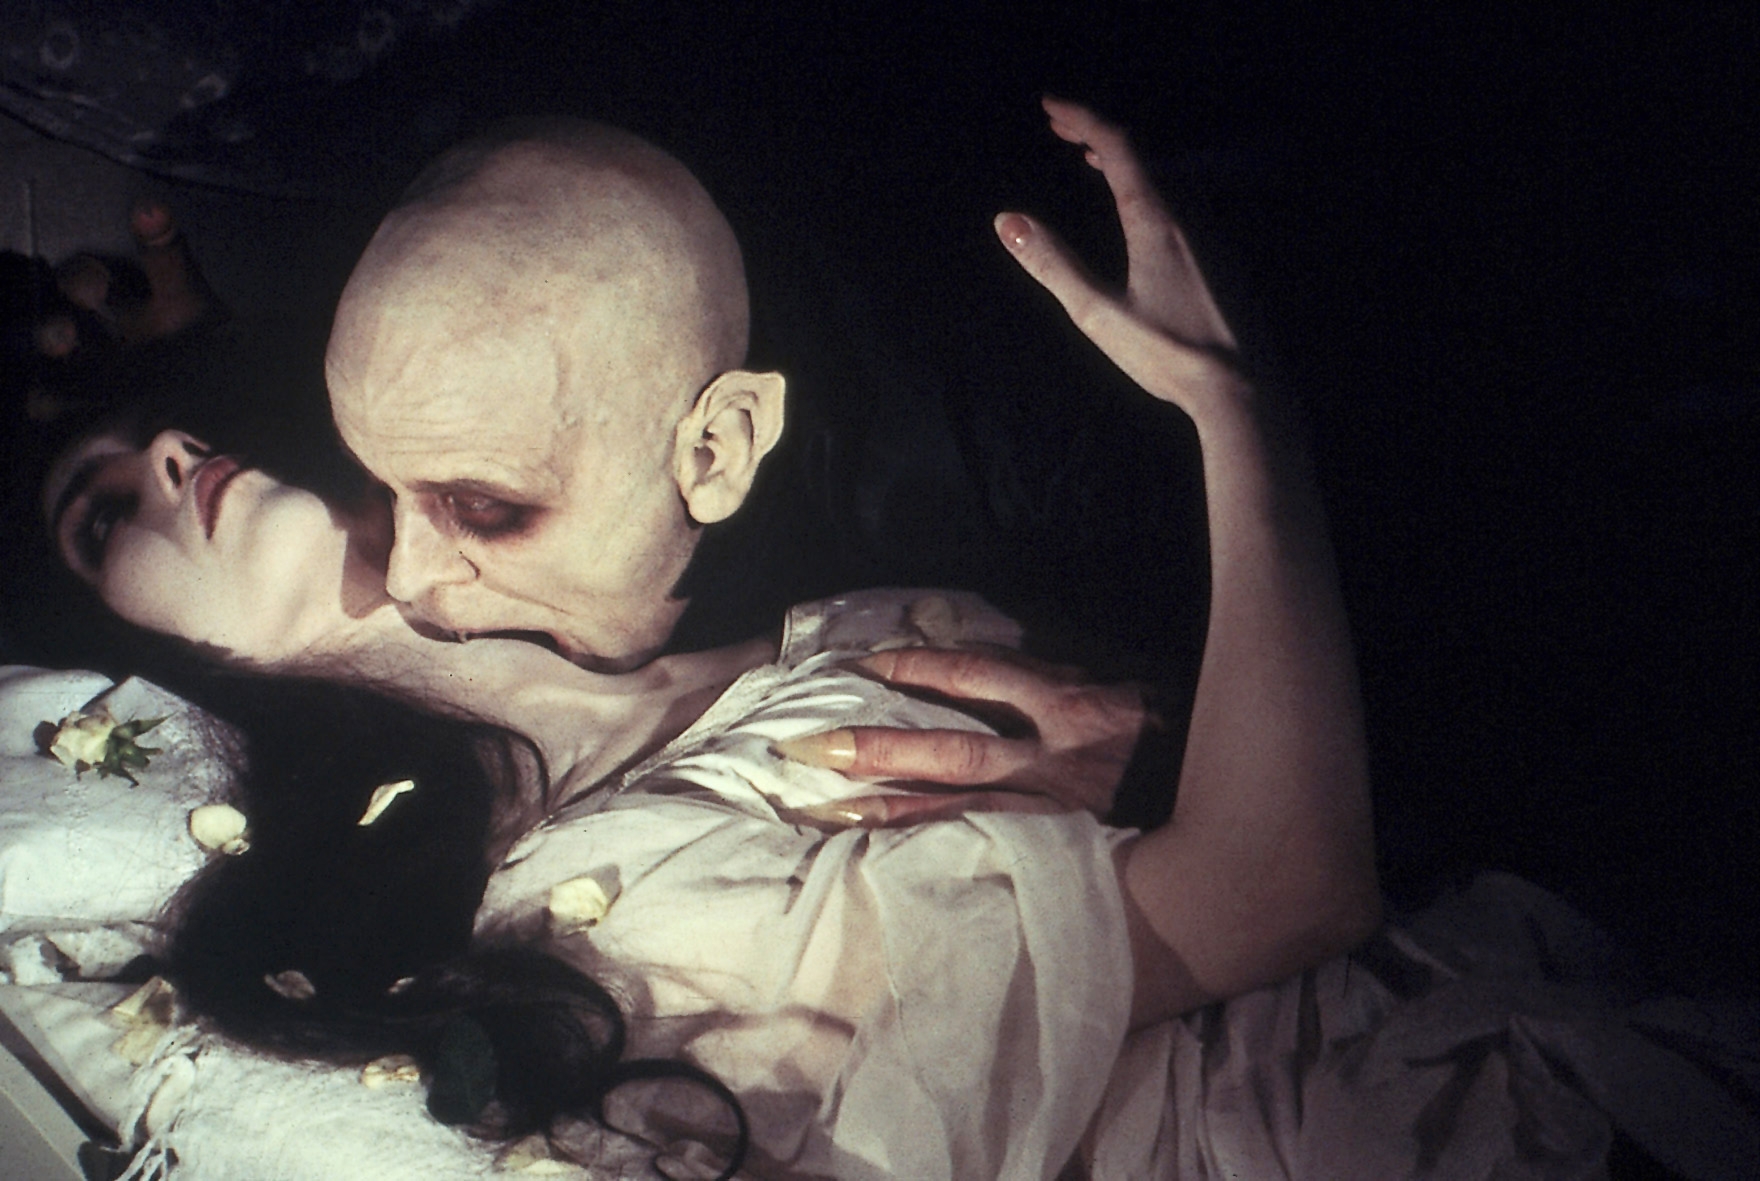 Image du film Nosferatu, fantôme de la nuit 0a3ad180-9811-44aa-a06b-0db3ee4a8fbb